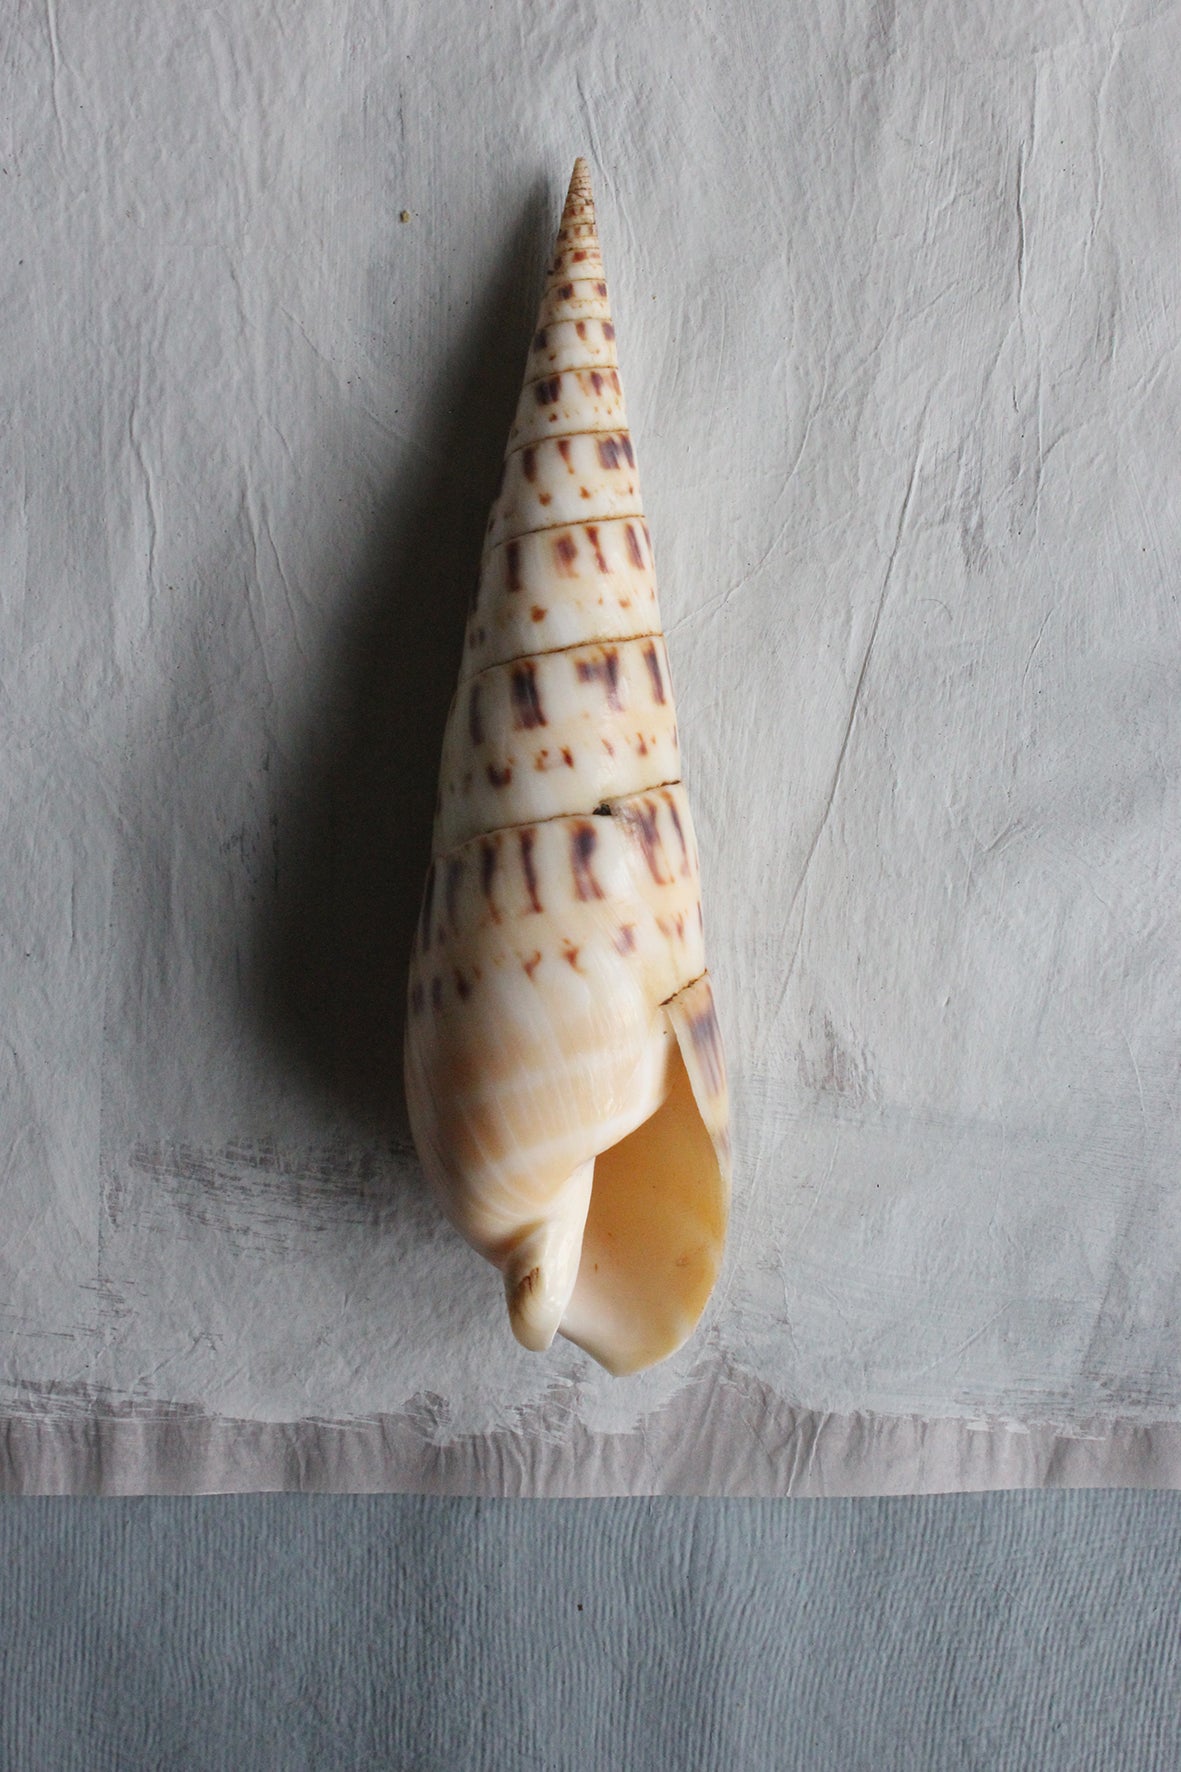 Precious old still life sea shell - one